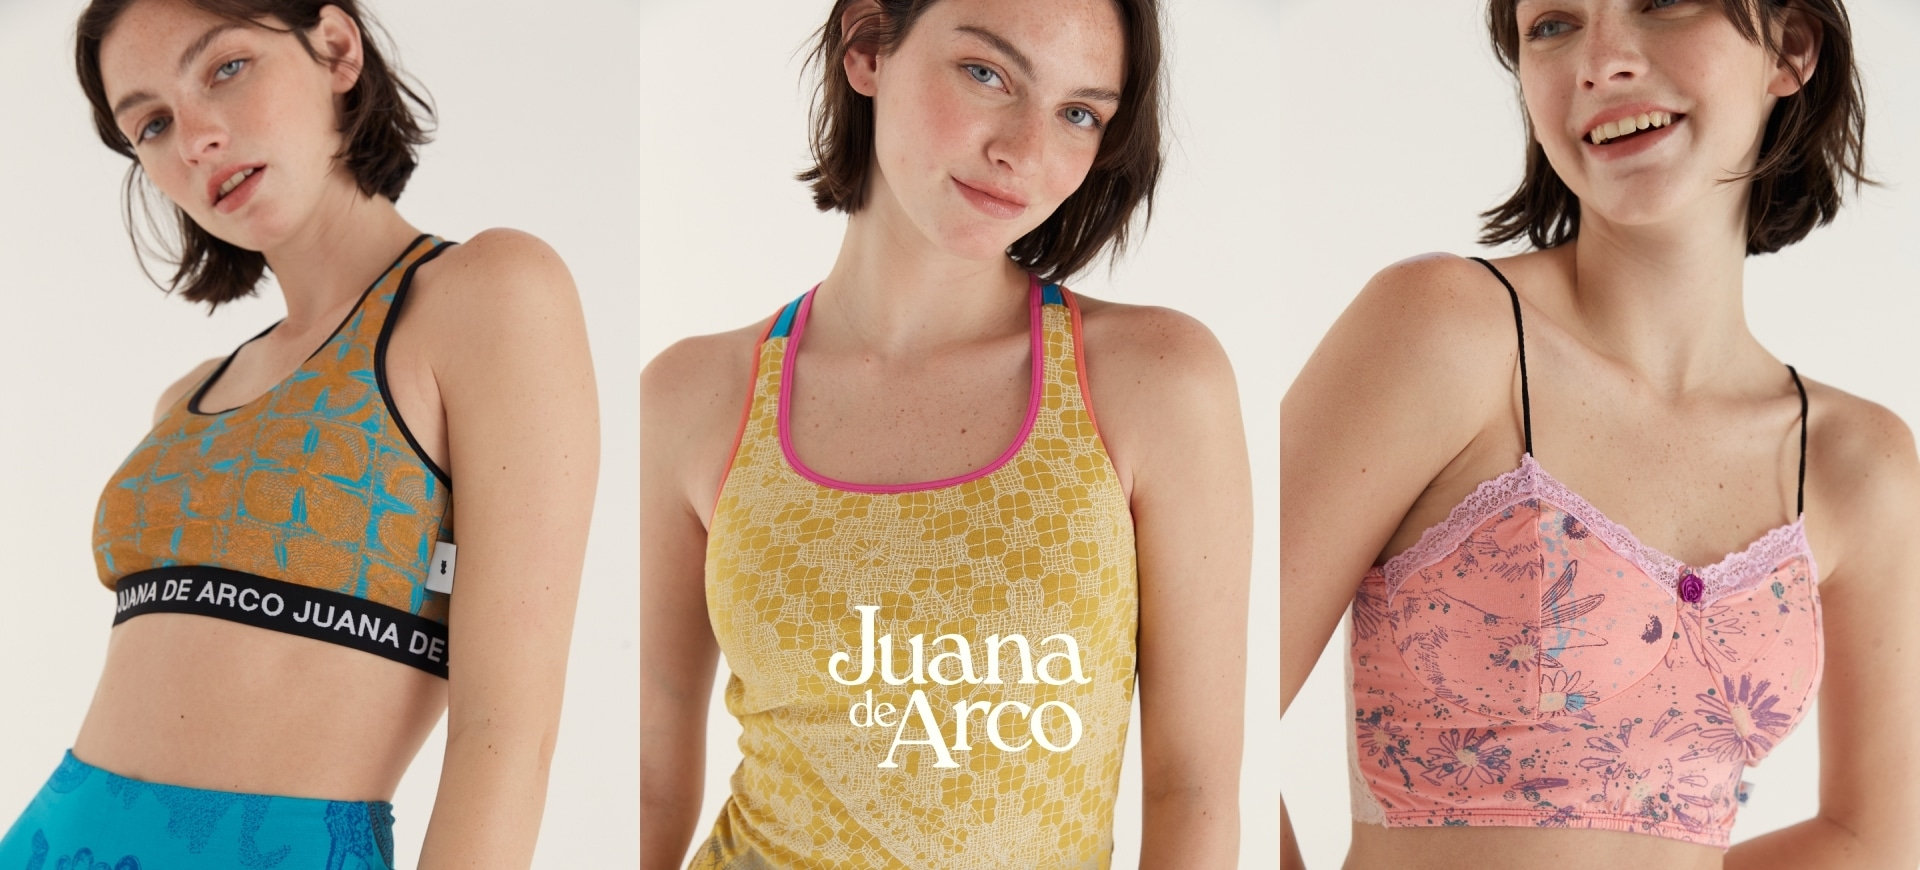 Juana de Arco | H.P.FRANCE公式サイト